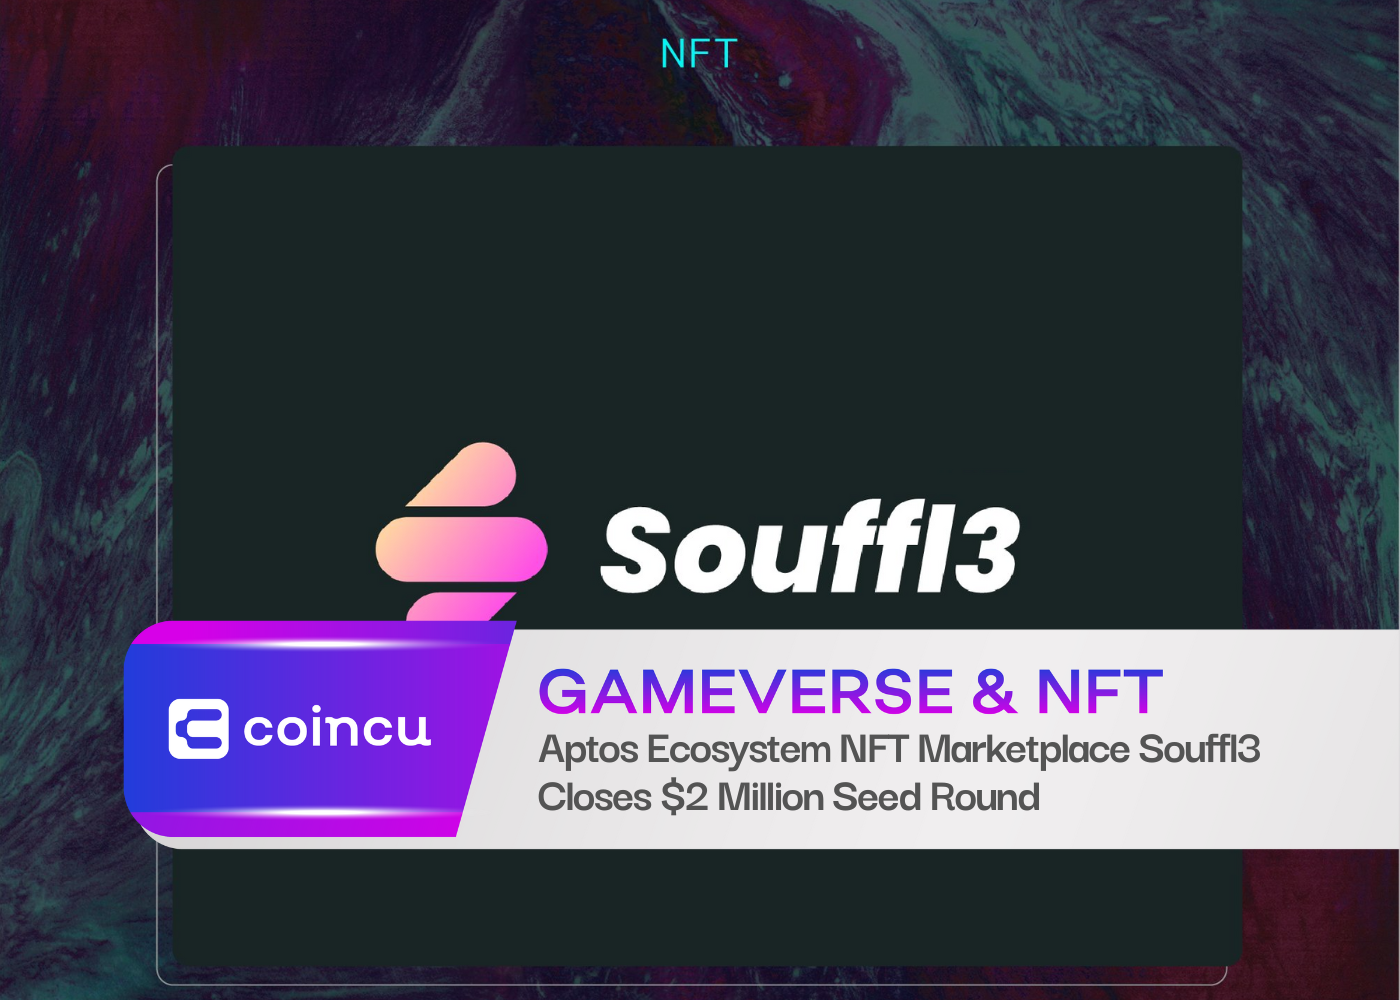 Aptos Ecosystem NFT Marketplace Souffl3 Closes $2 Million Seed Round